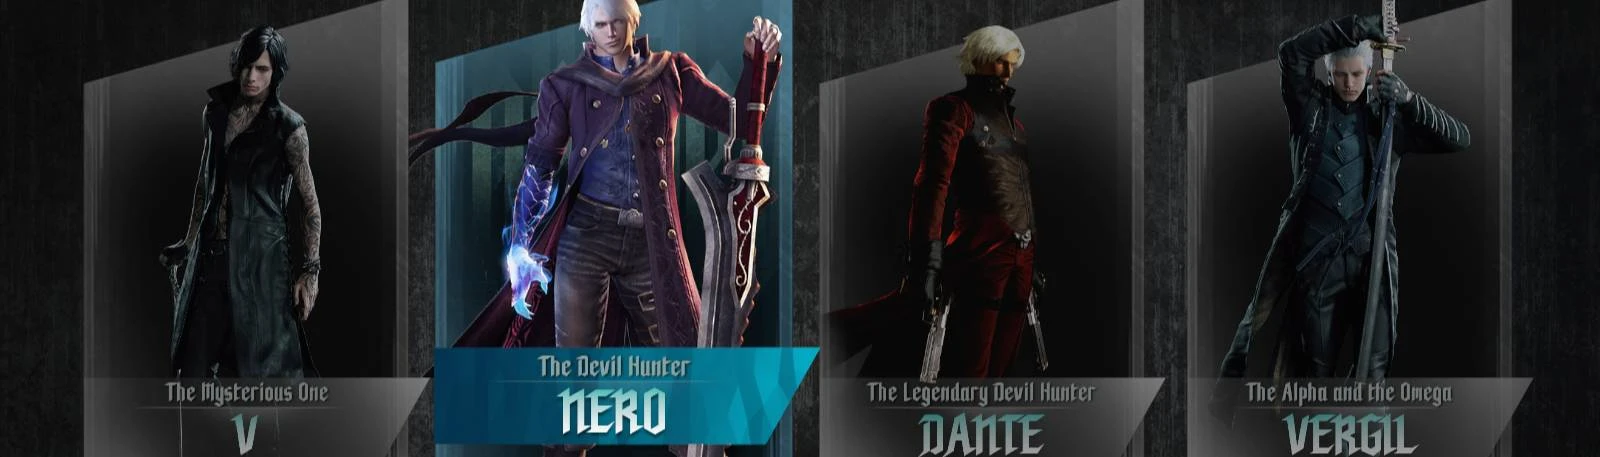 DMC2 Dante at Devil May Cry 5 Nexus - Mods and community